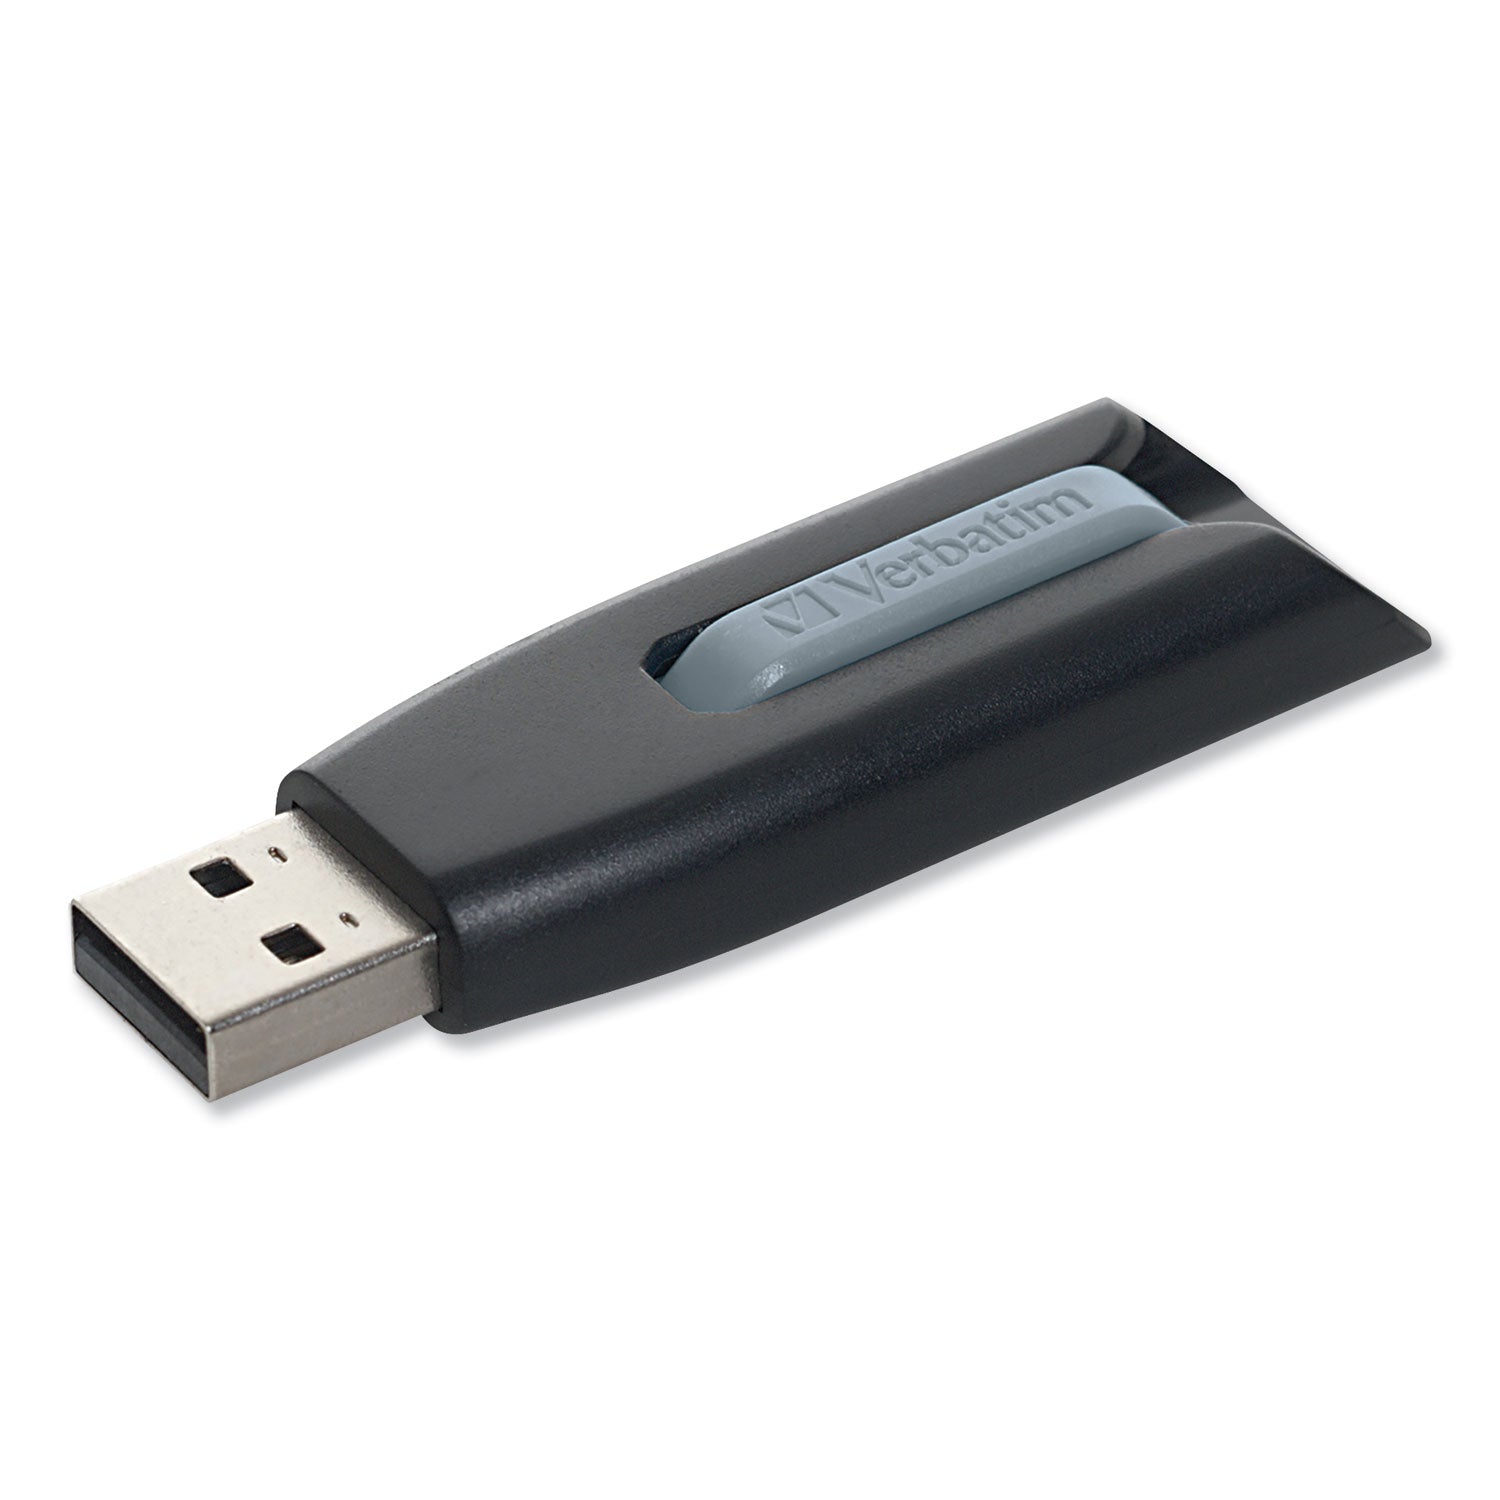 Store 'n' Go V3 USB 3.0 Drive, 8 GB, Black/Gray - 